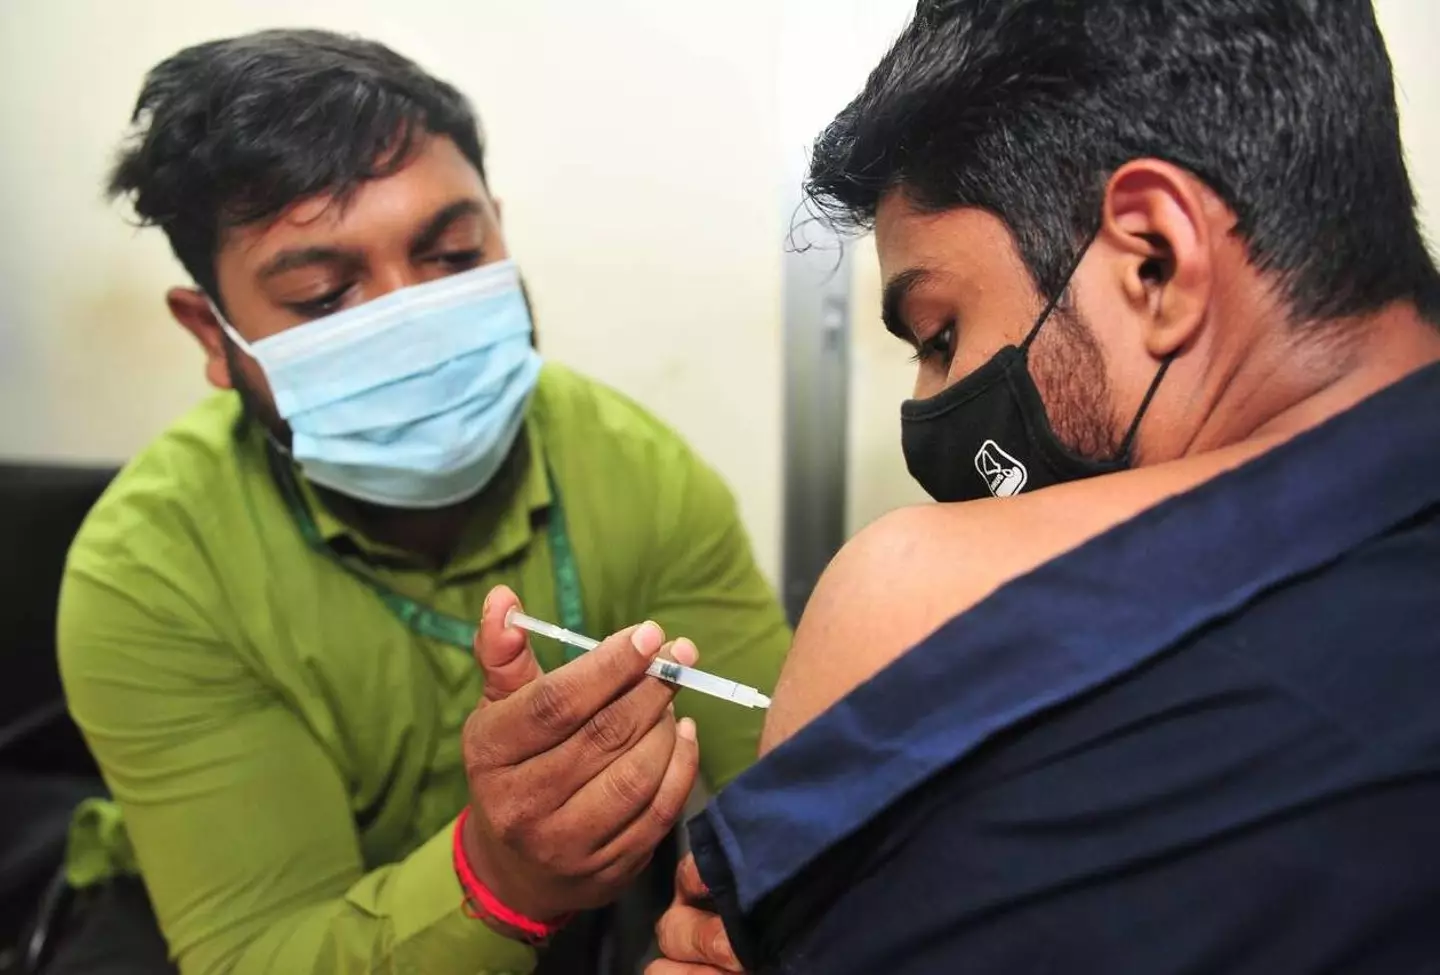 Health staff administer a vaccine